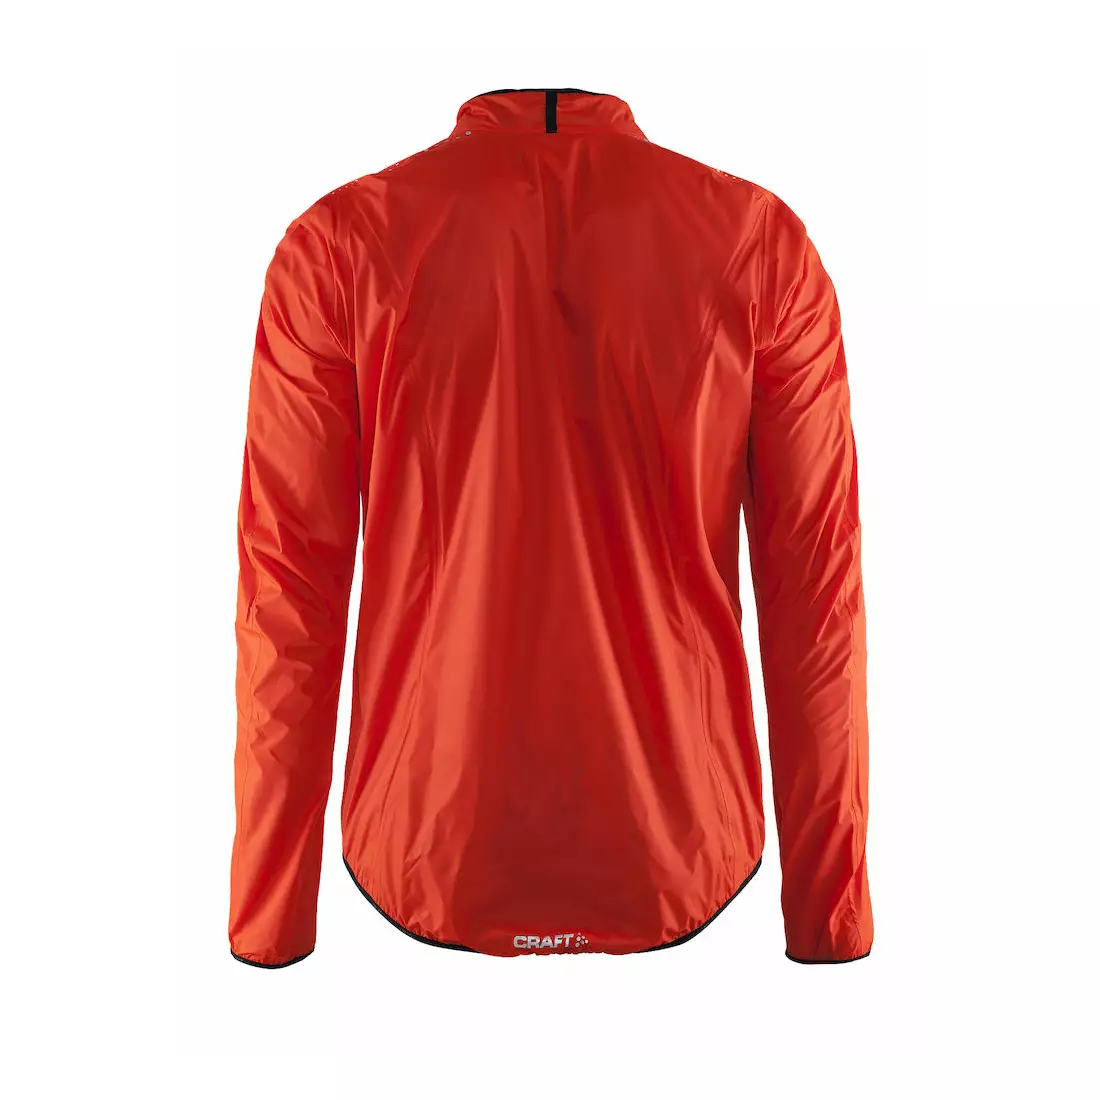 CRAFT MOVE men's rainproof cycling jacket 1902578-2569, color: orange